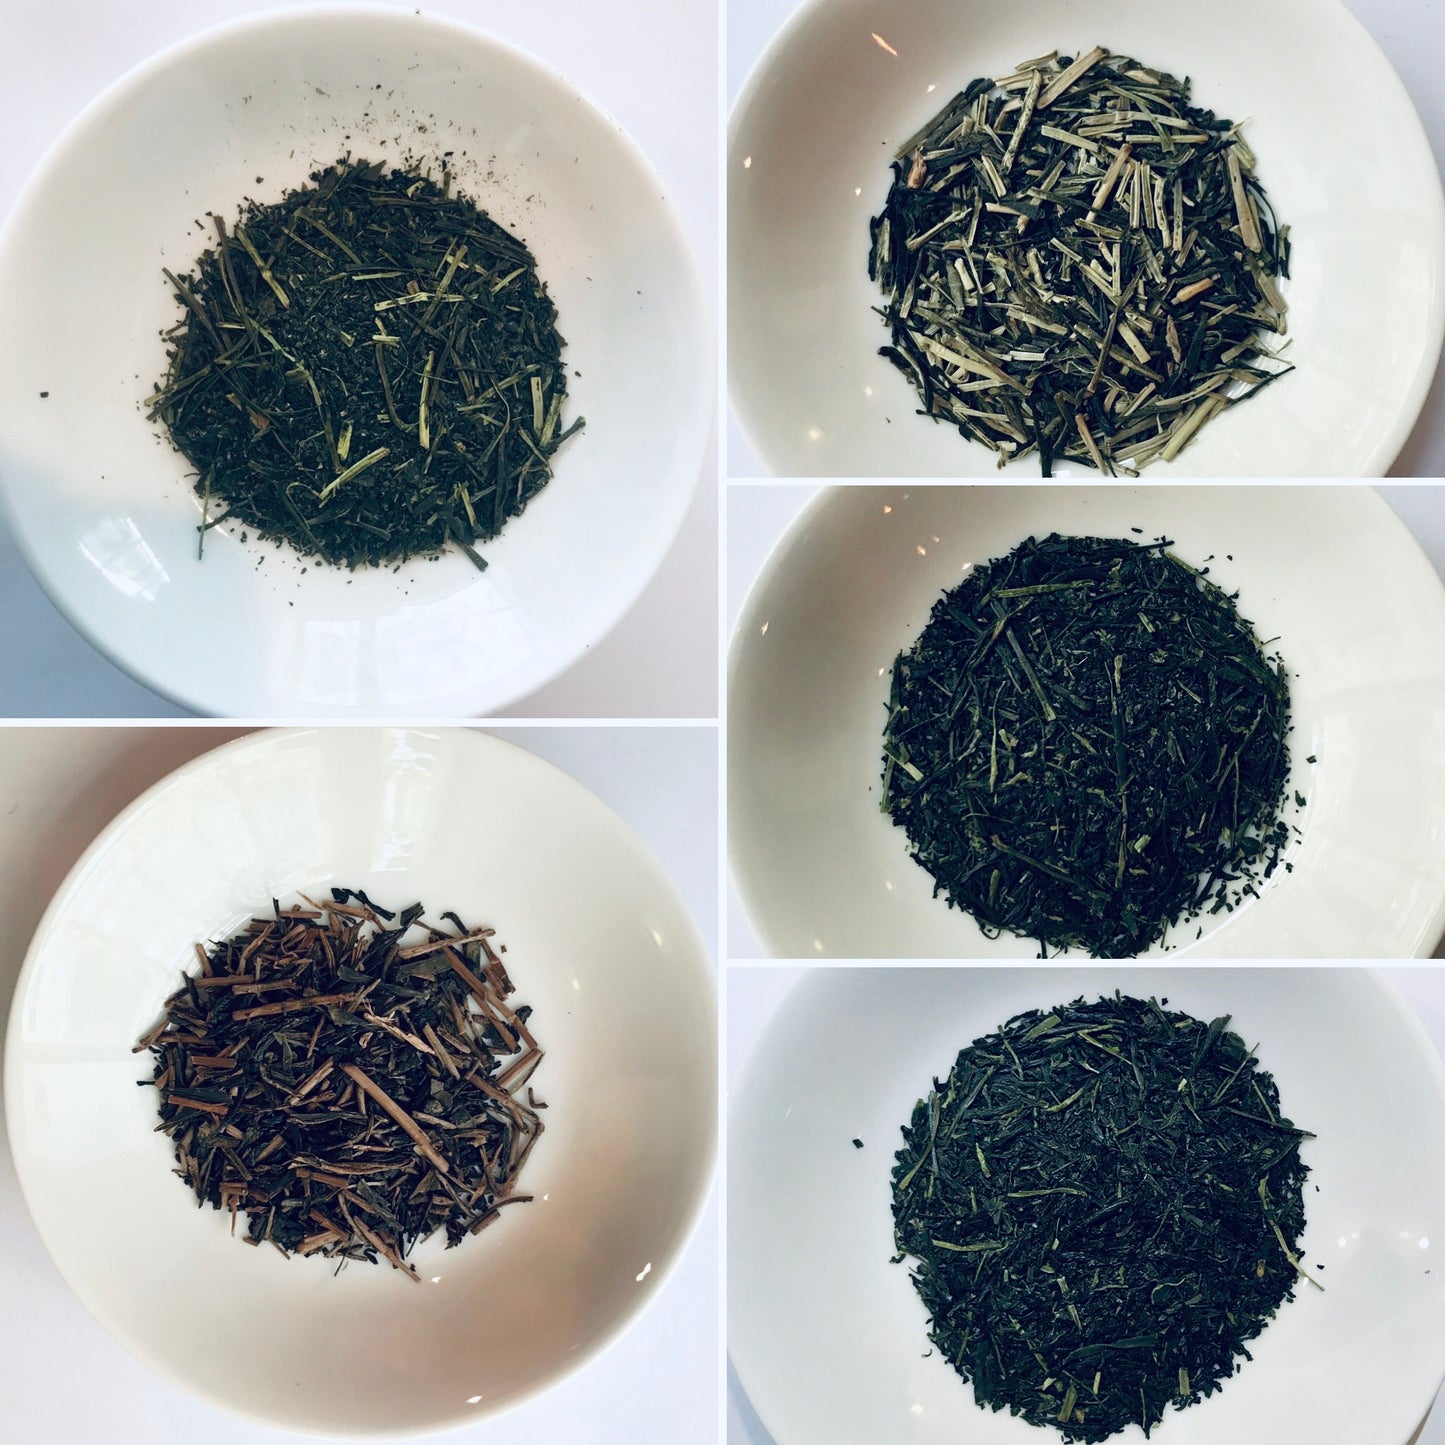 Tasting Assortment of 5 Different Kinds of Tea